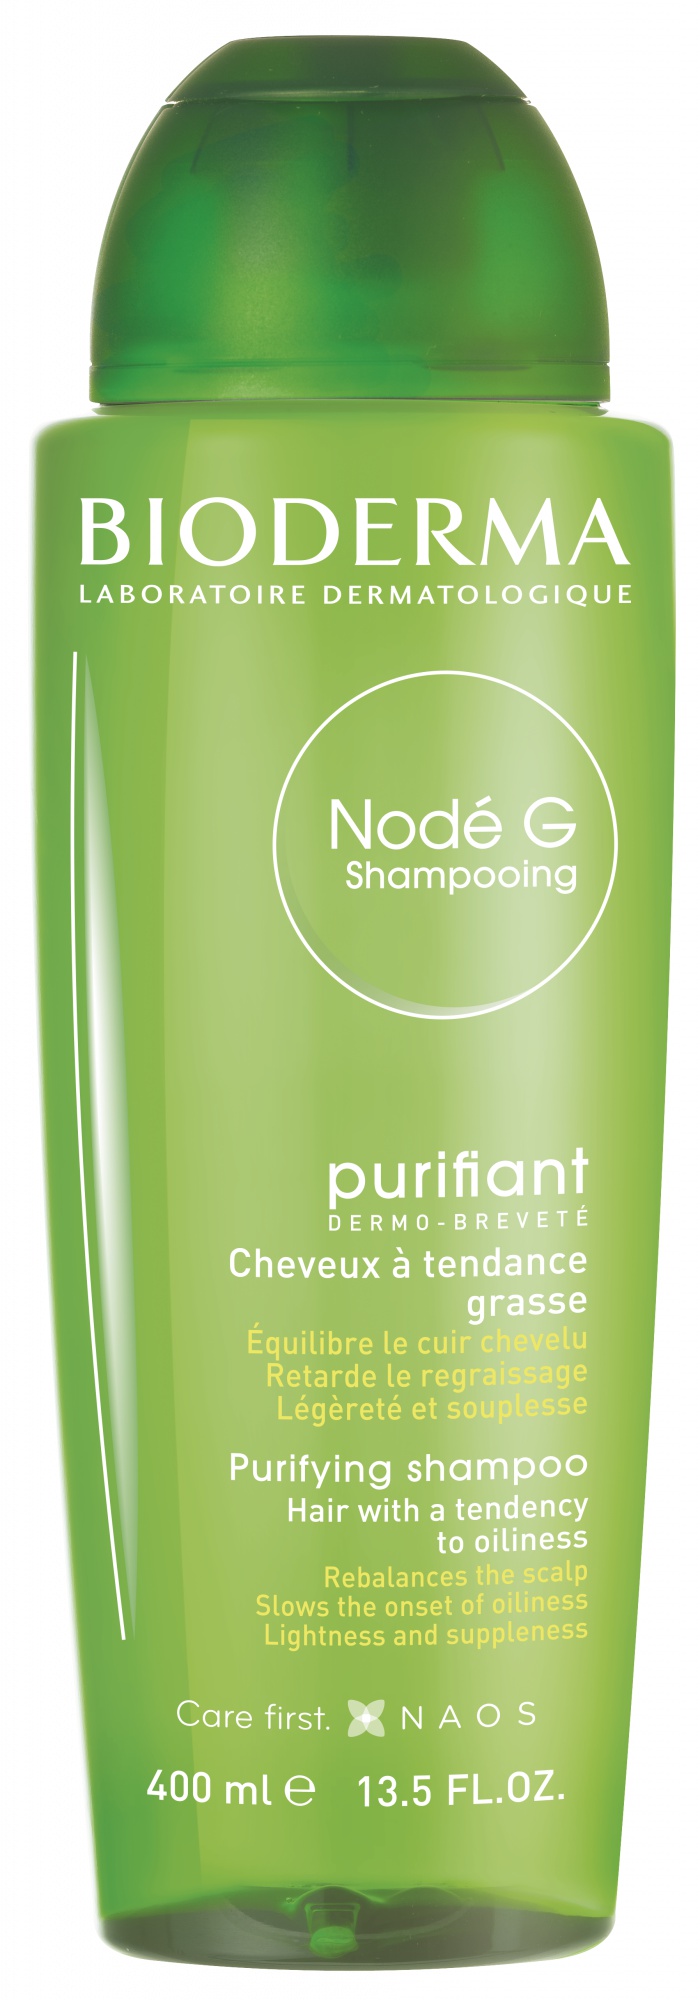 Bioderma Nodé G Shampooing Purifying Shampoo